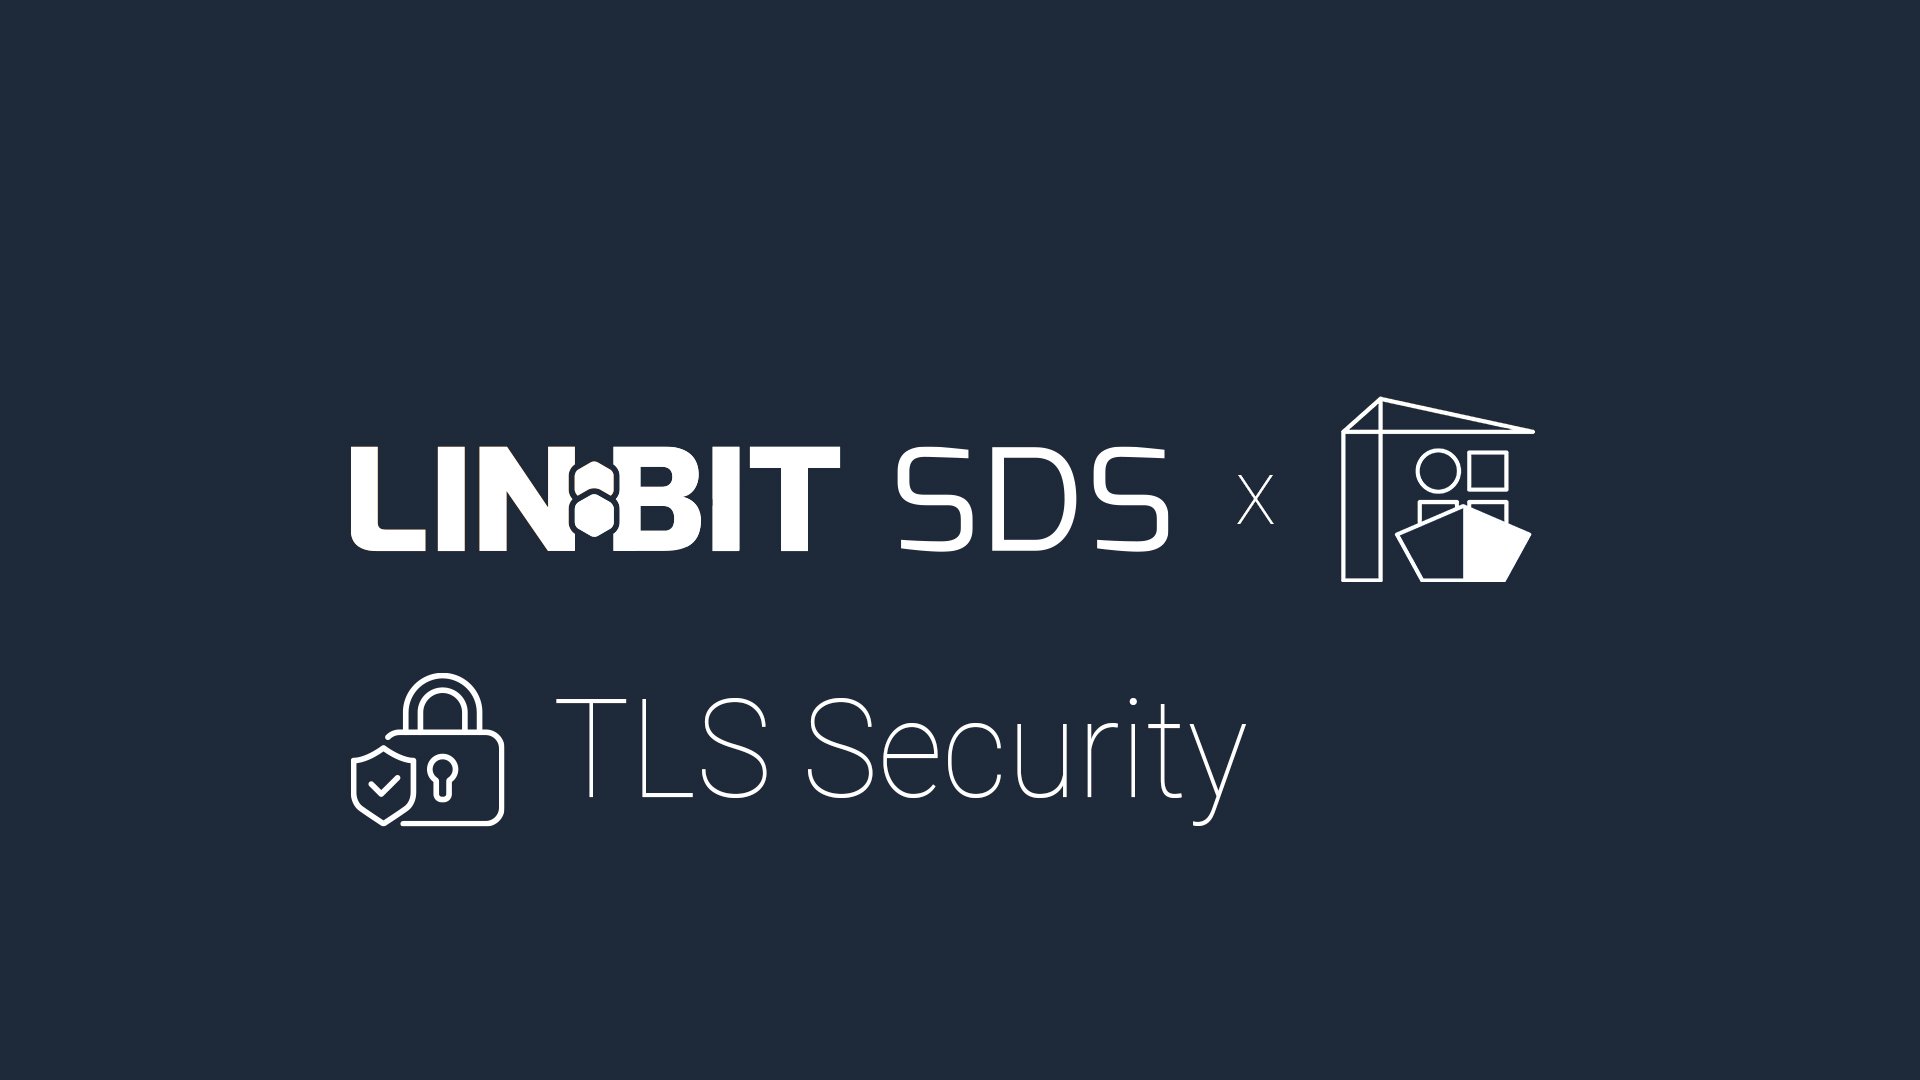 TLS Security